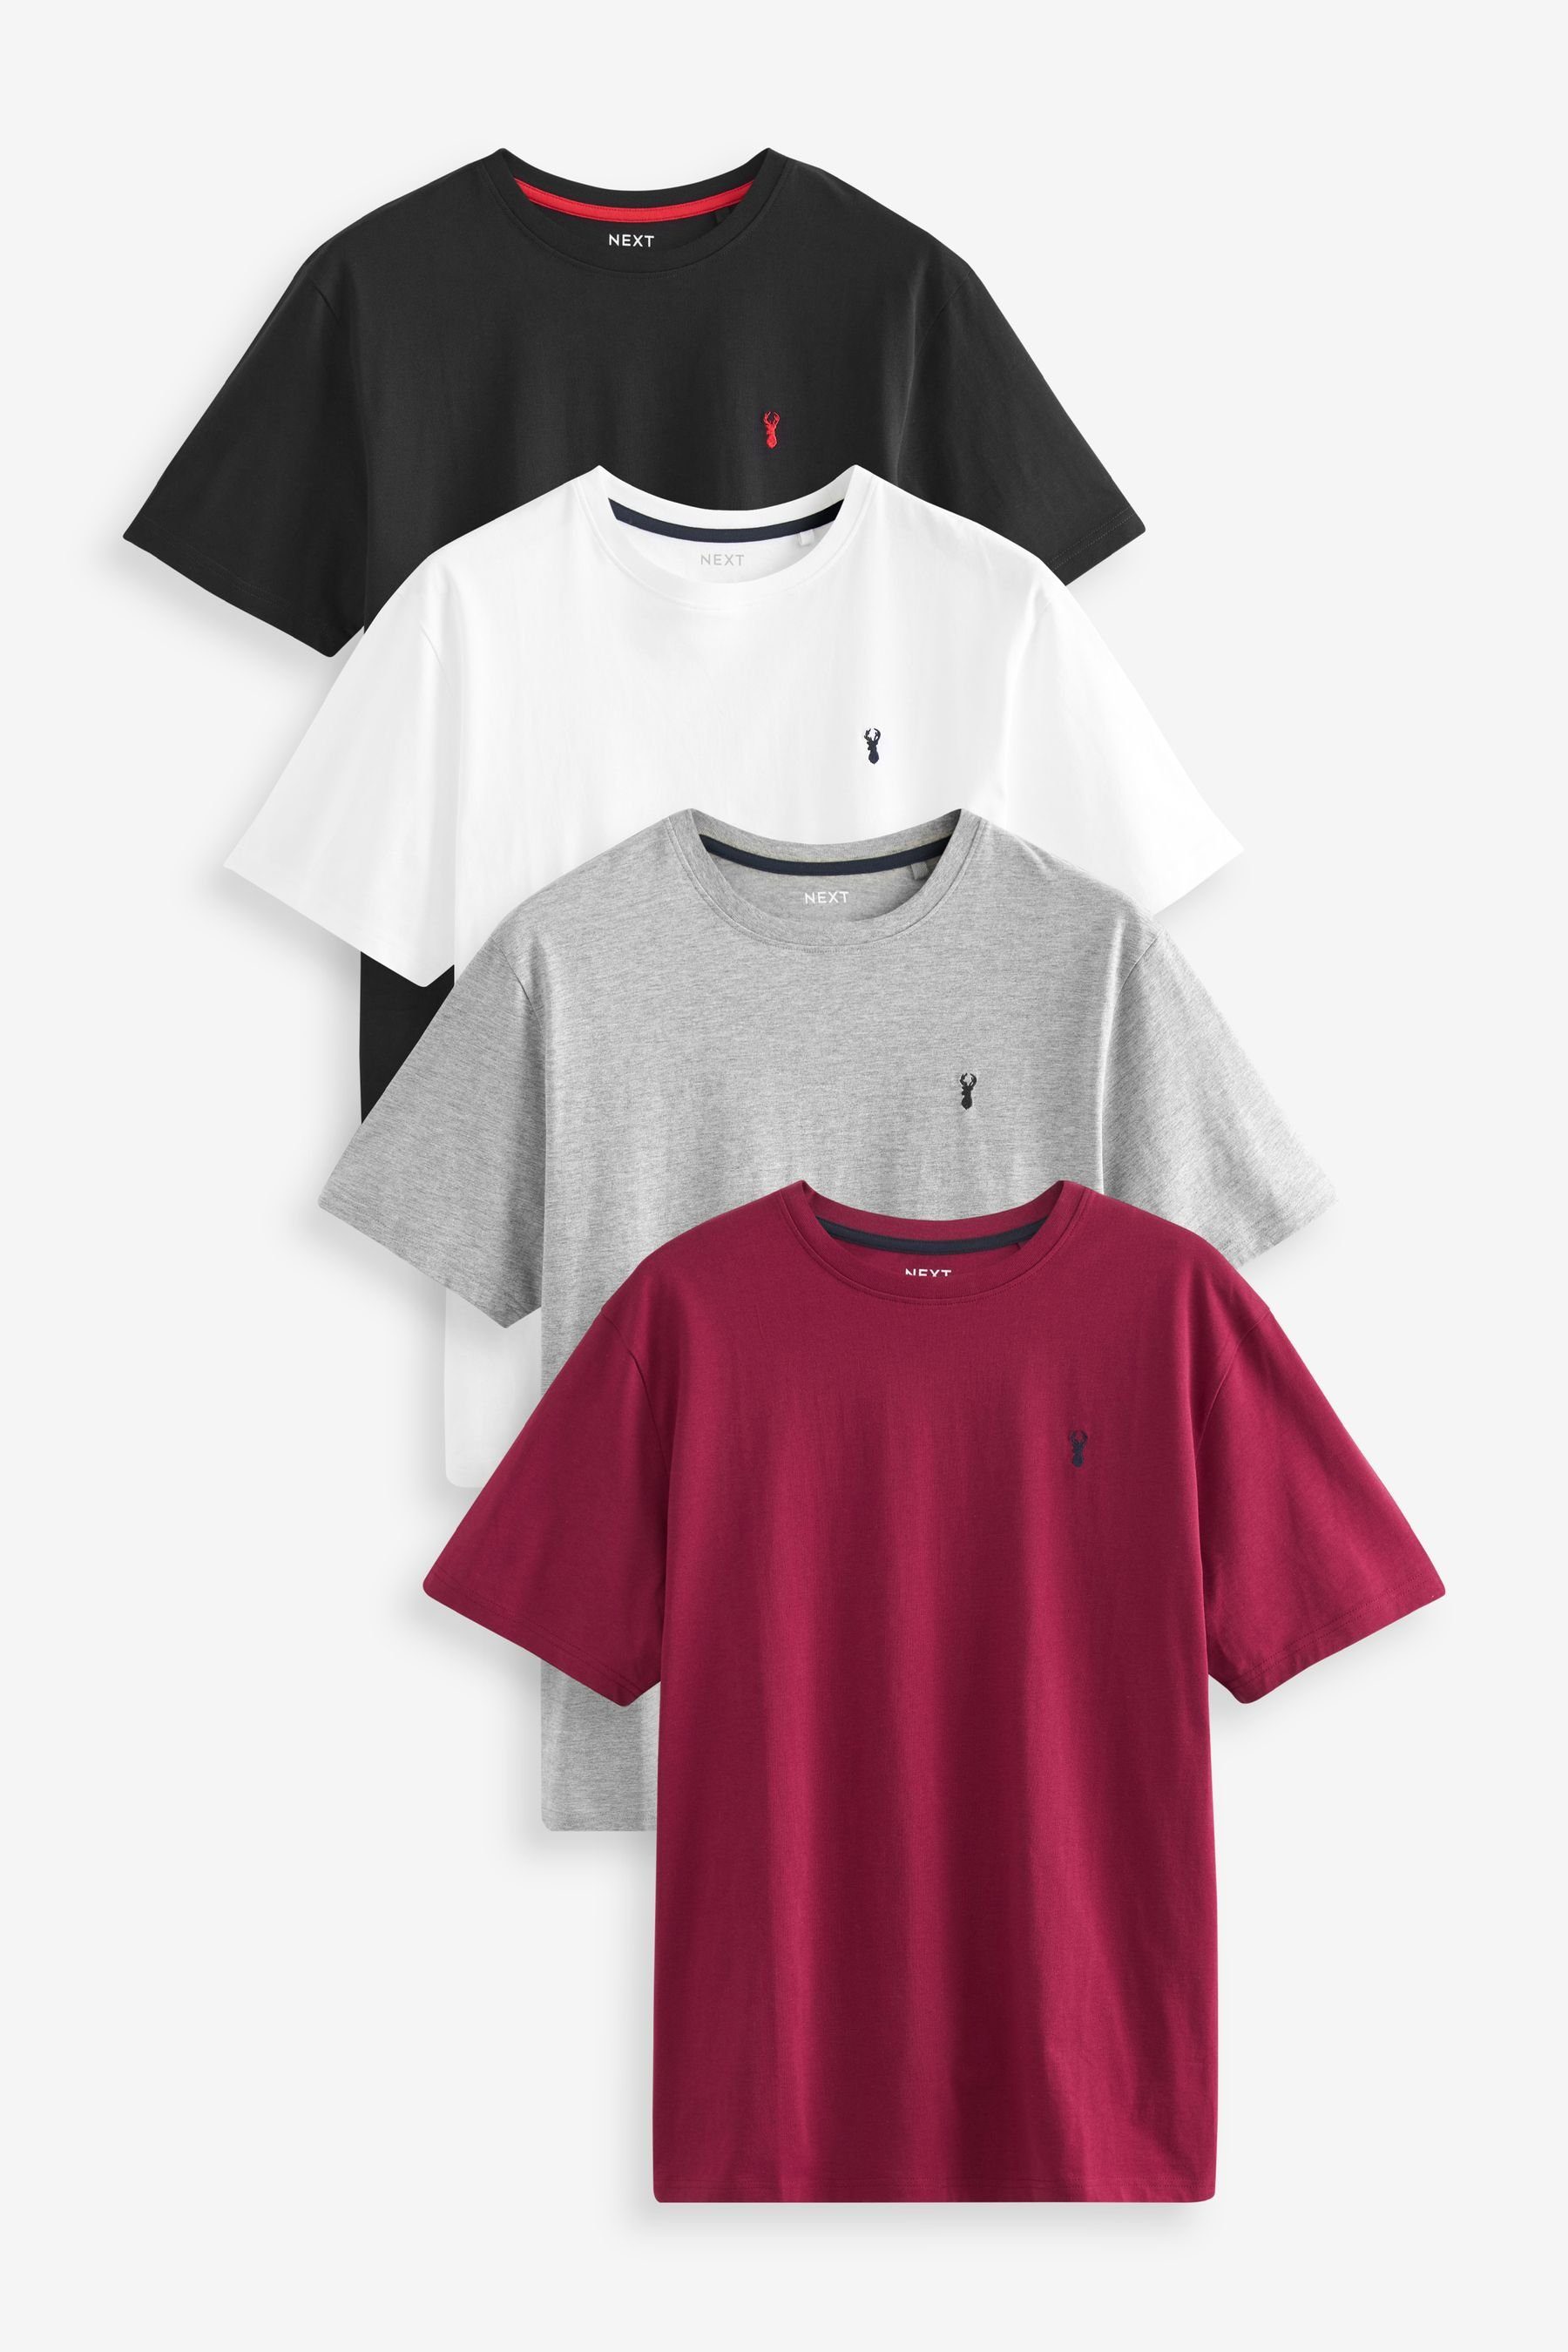 Next T-Shirt 4er-Pack T-Shirts (4-tlg) Burgundy Red/White/Grey/Black